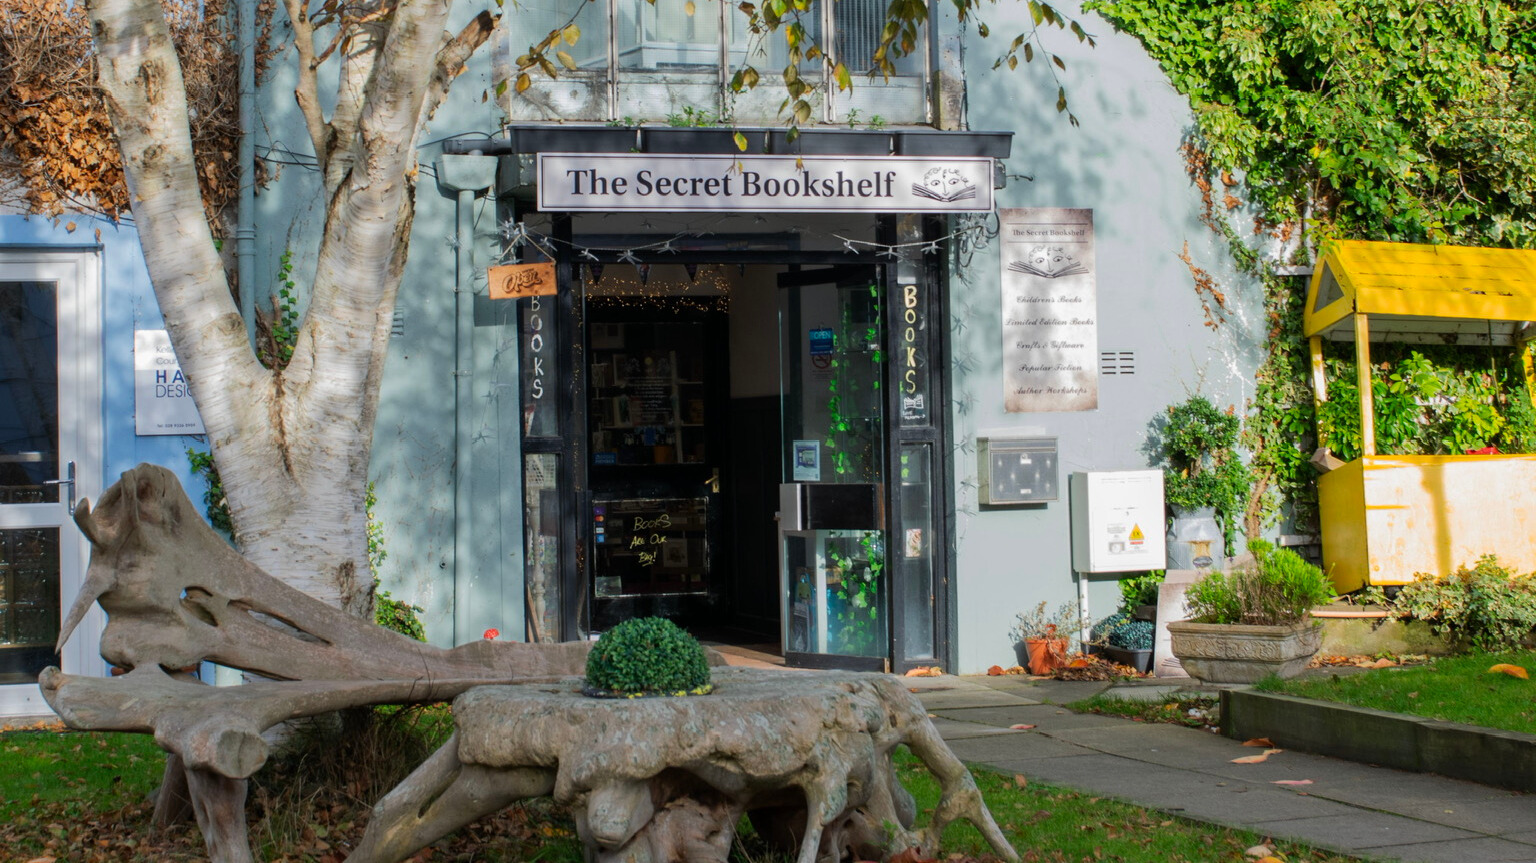 The Secret Bookshelf